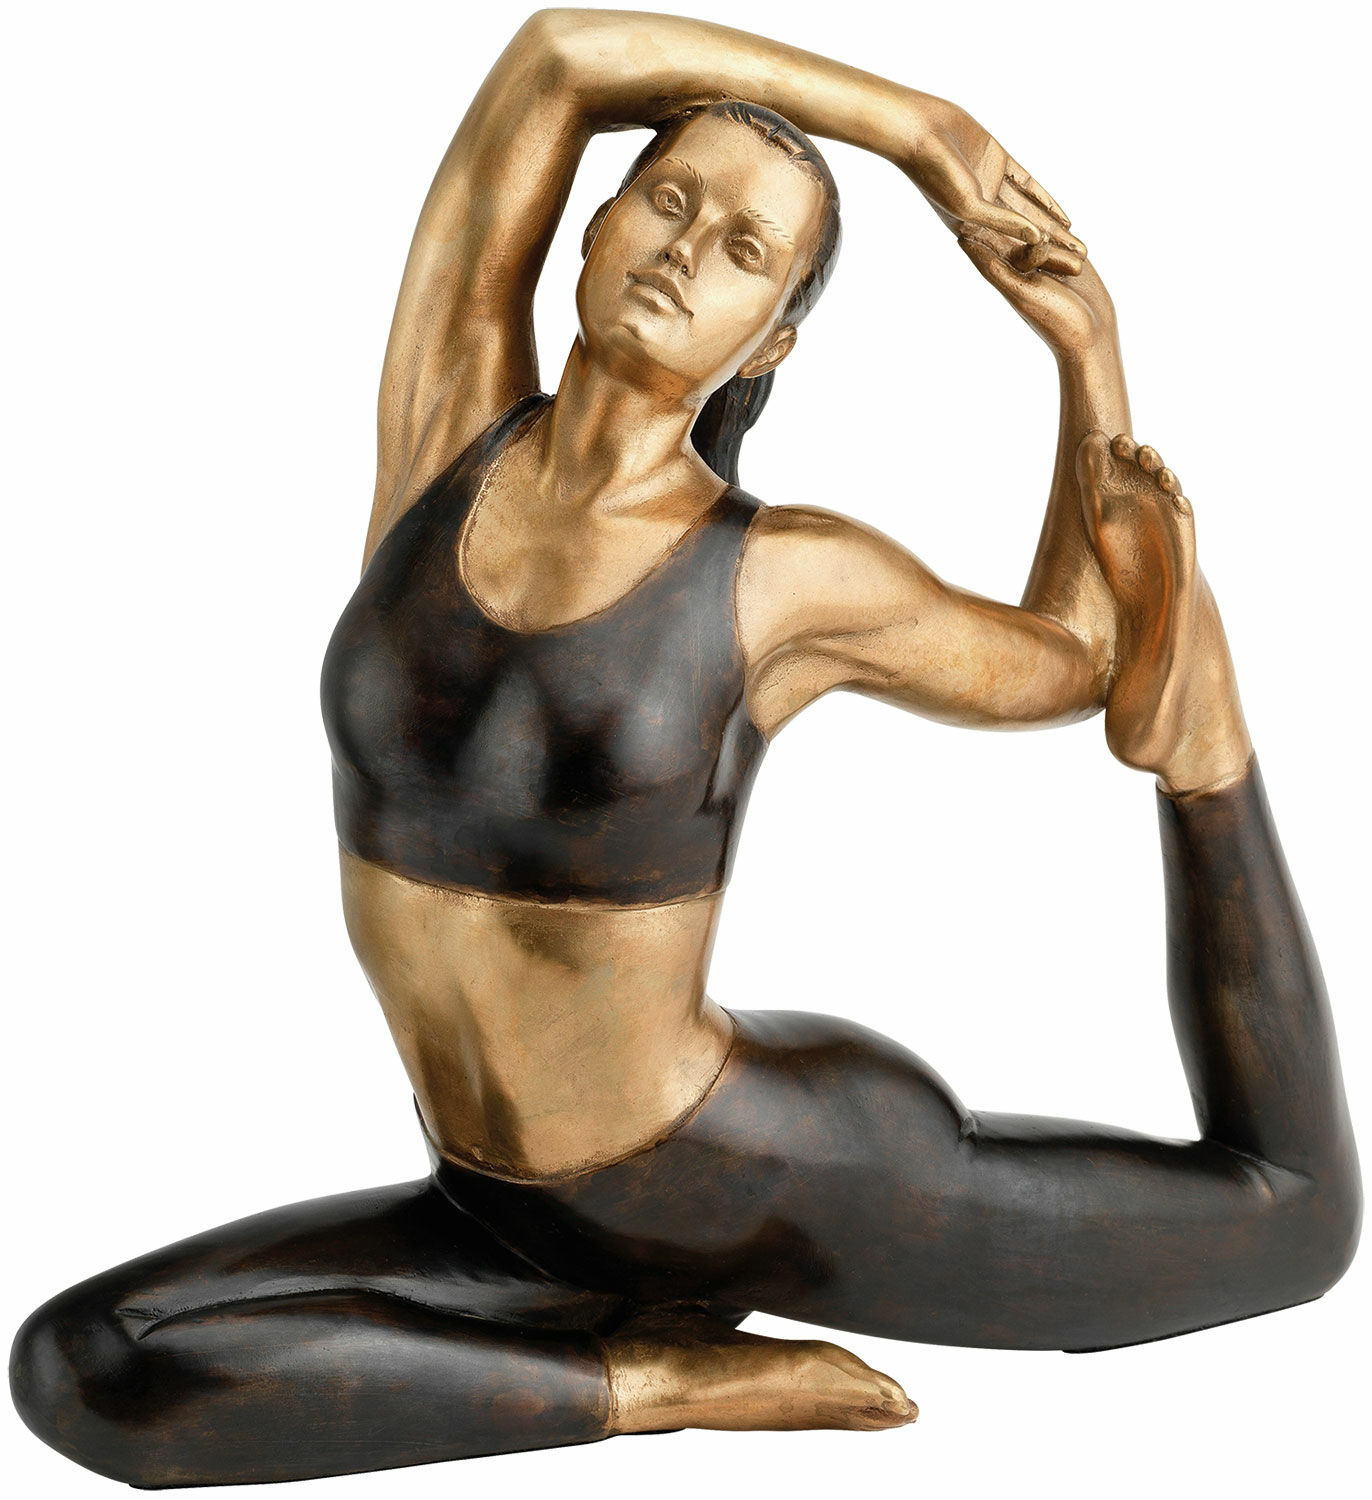 Sculpture "Mindfulness" (2021), bronze by Richard Senoner